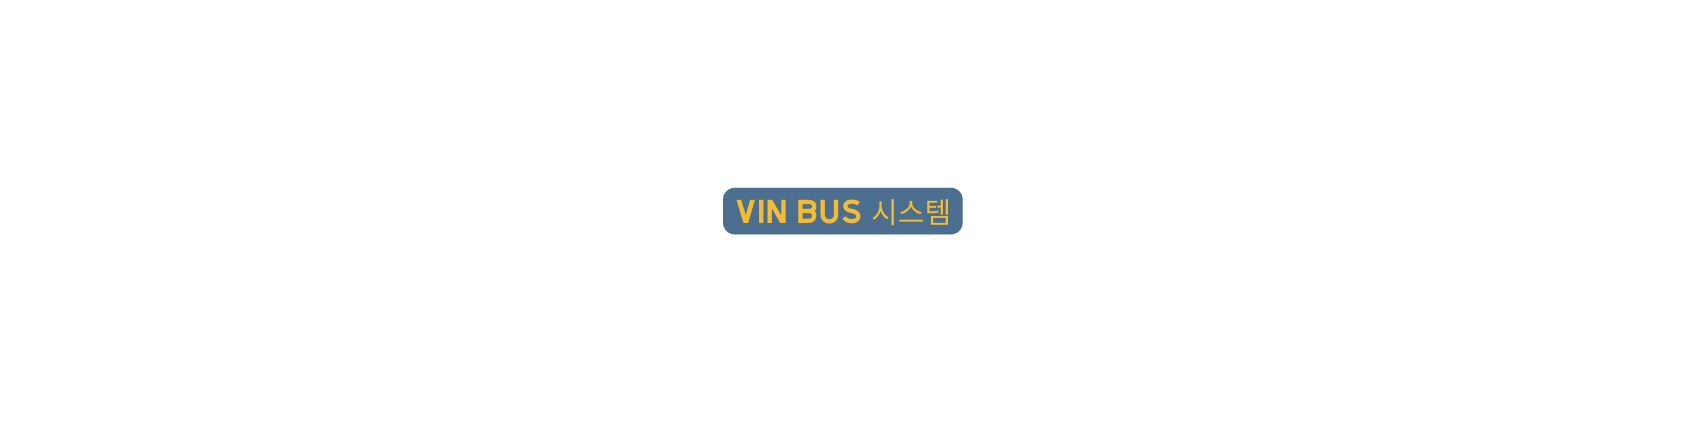 VIN BUS 시스템